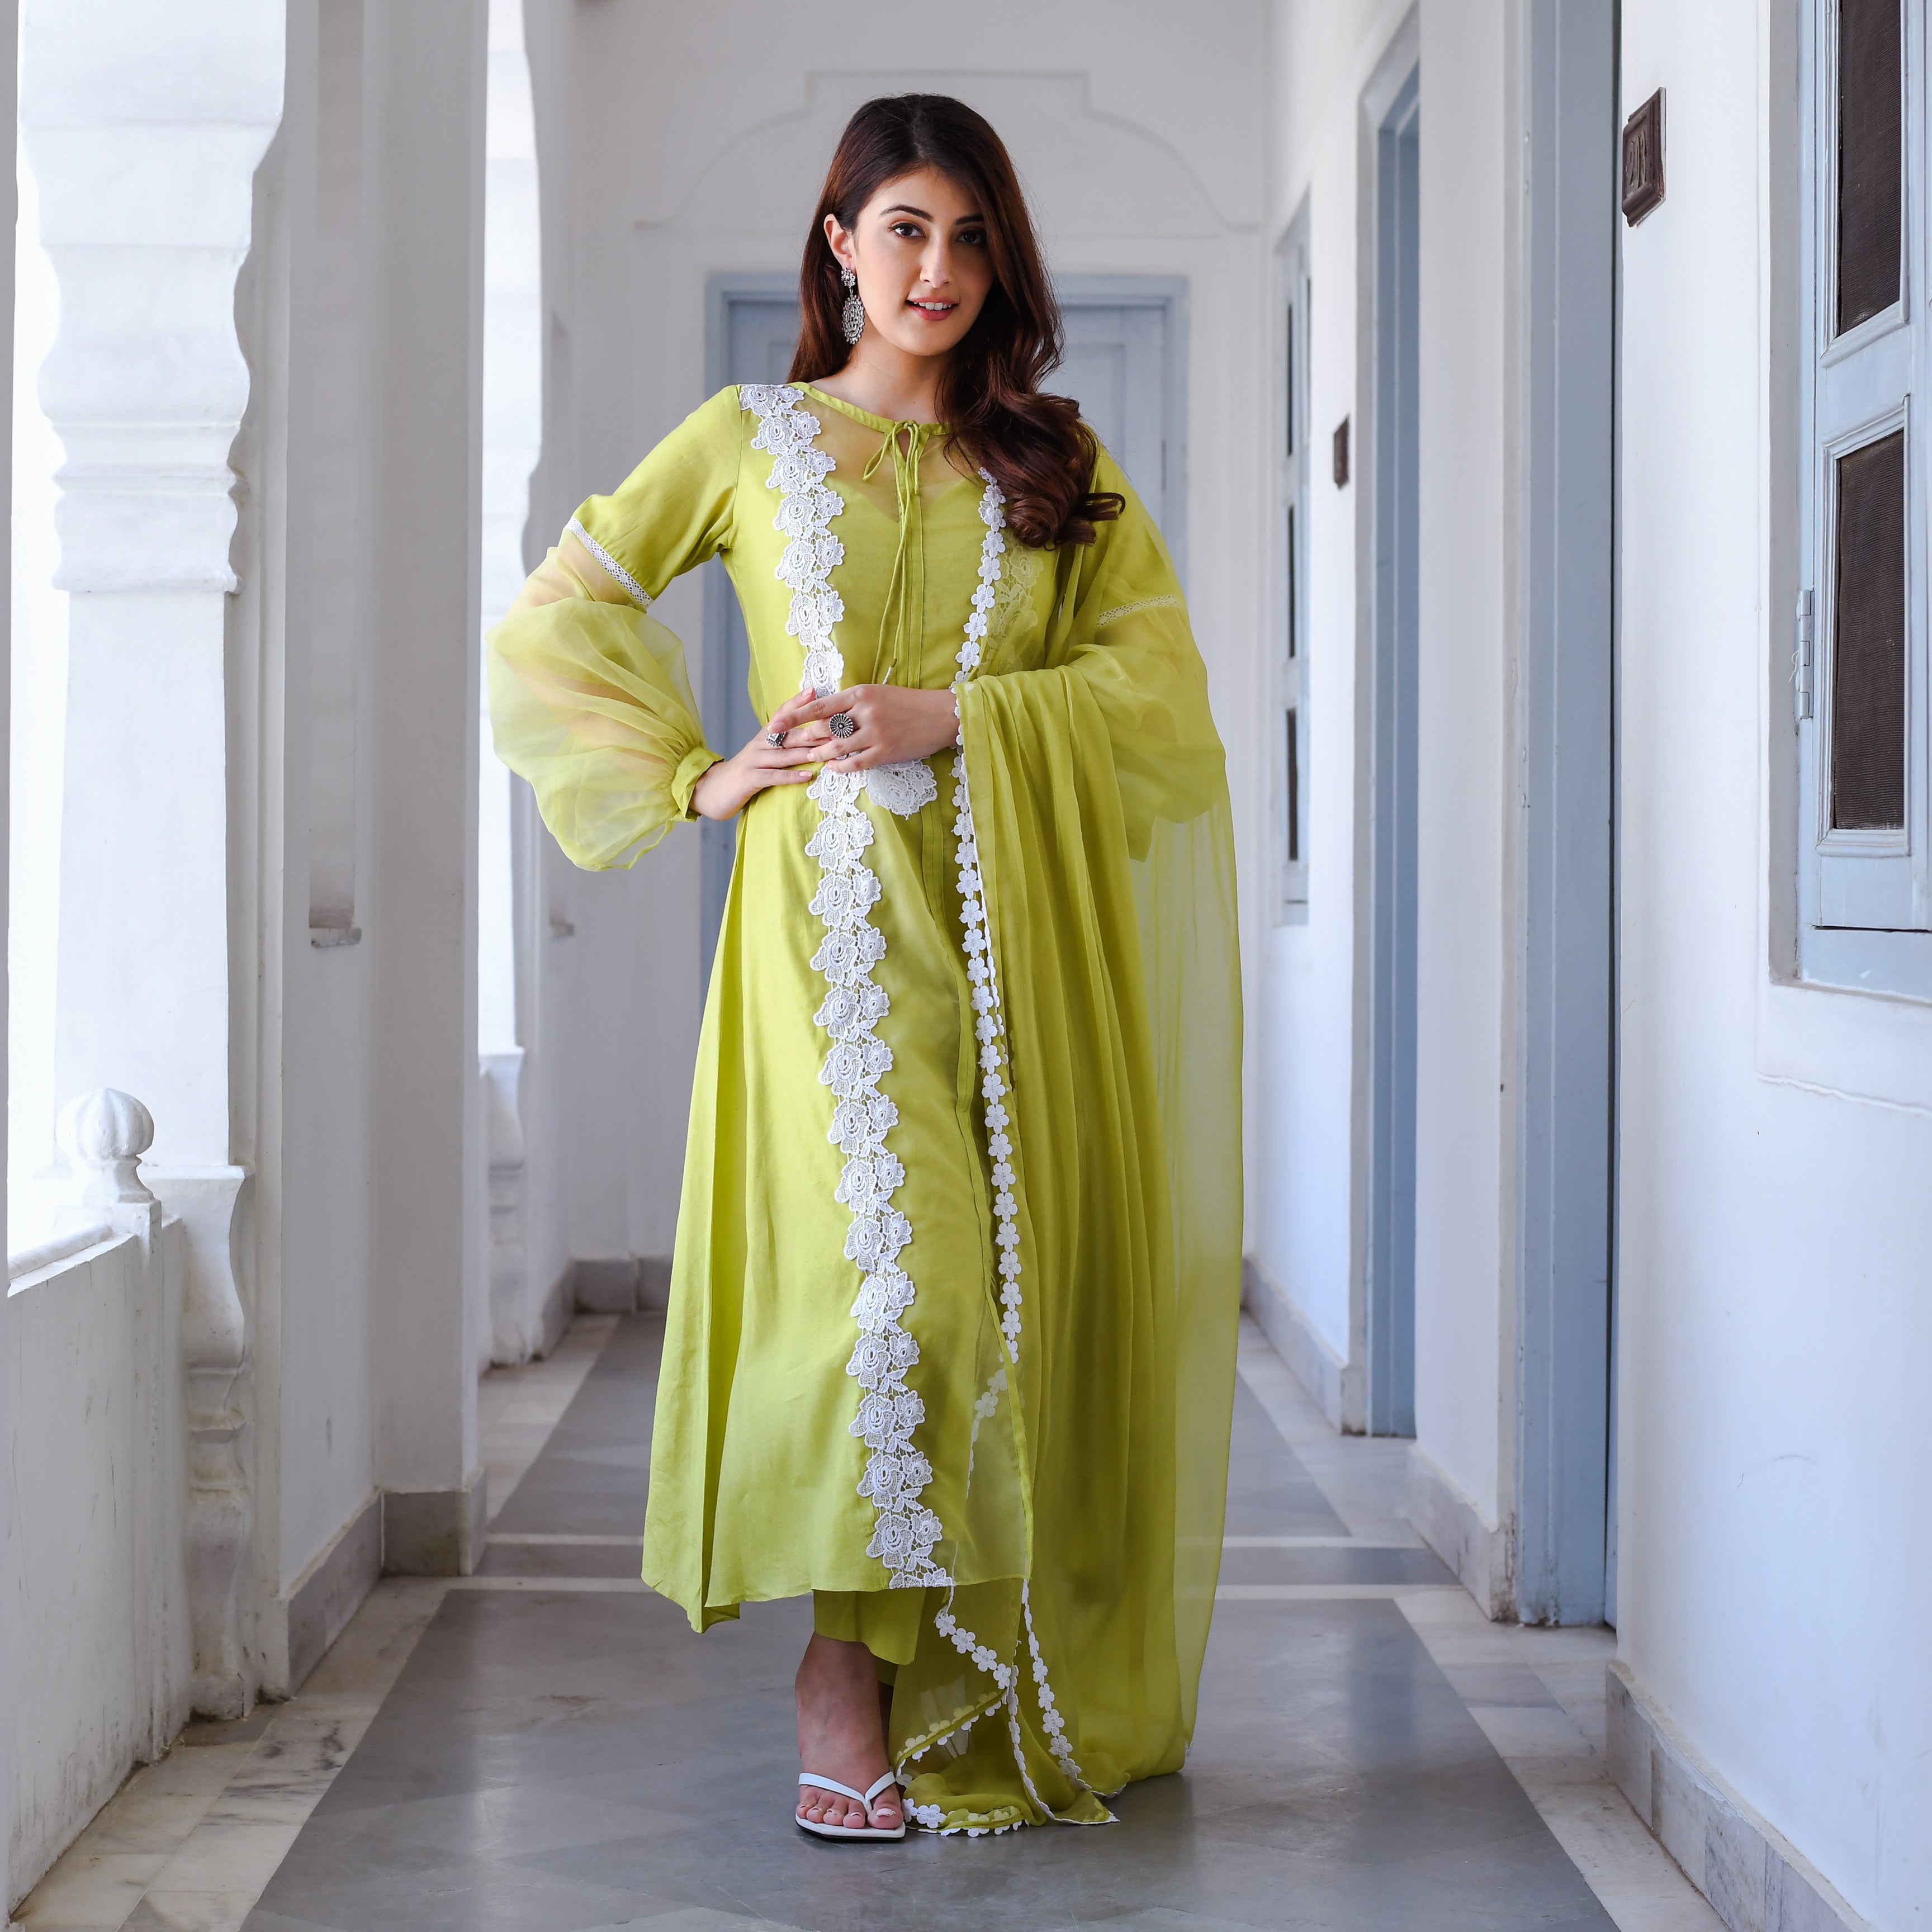  Kirshi Green Ethnic Wear Designer Traditional Suit Set For Women Online